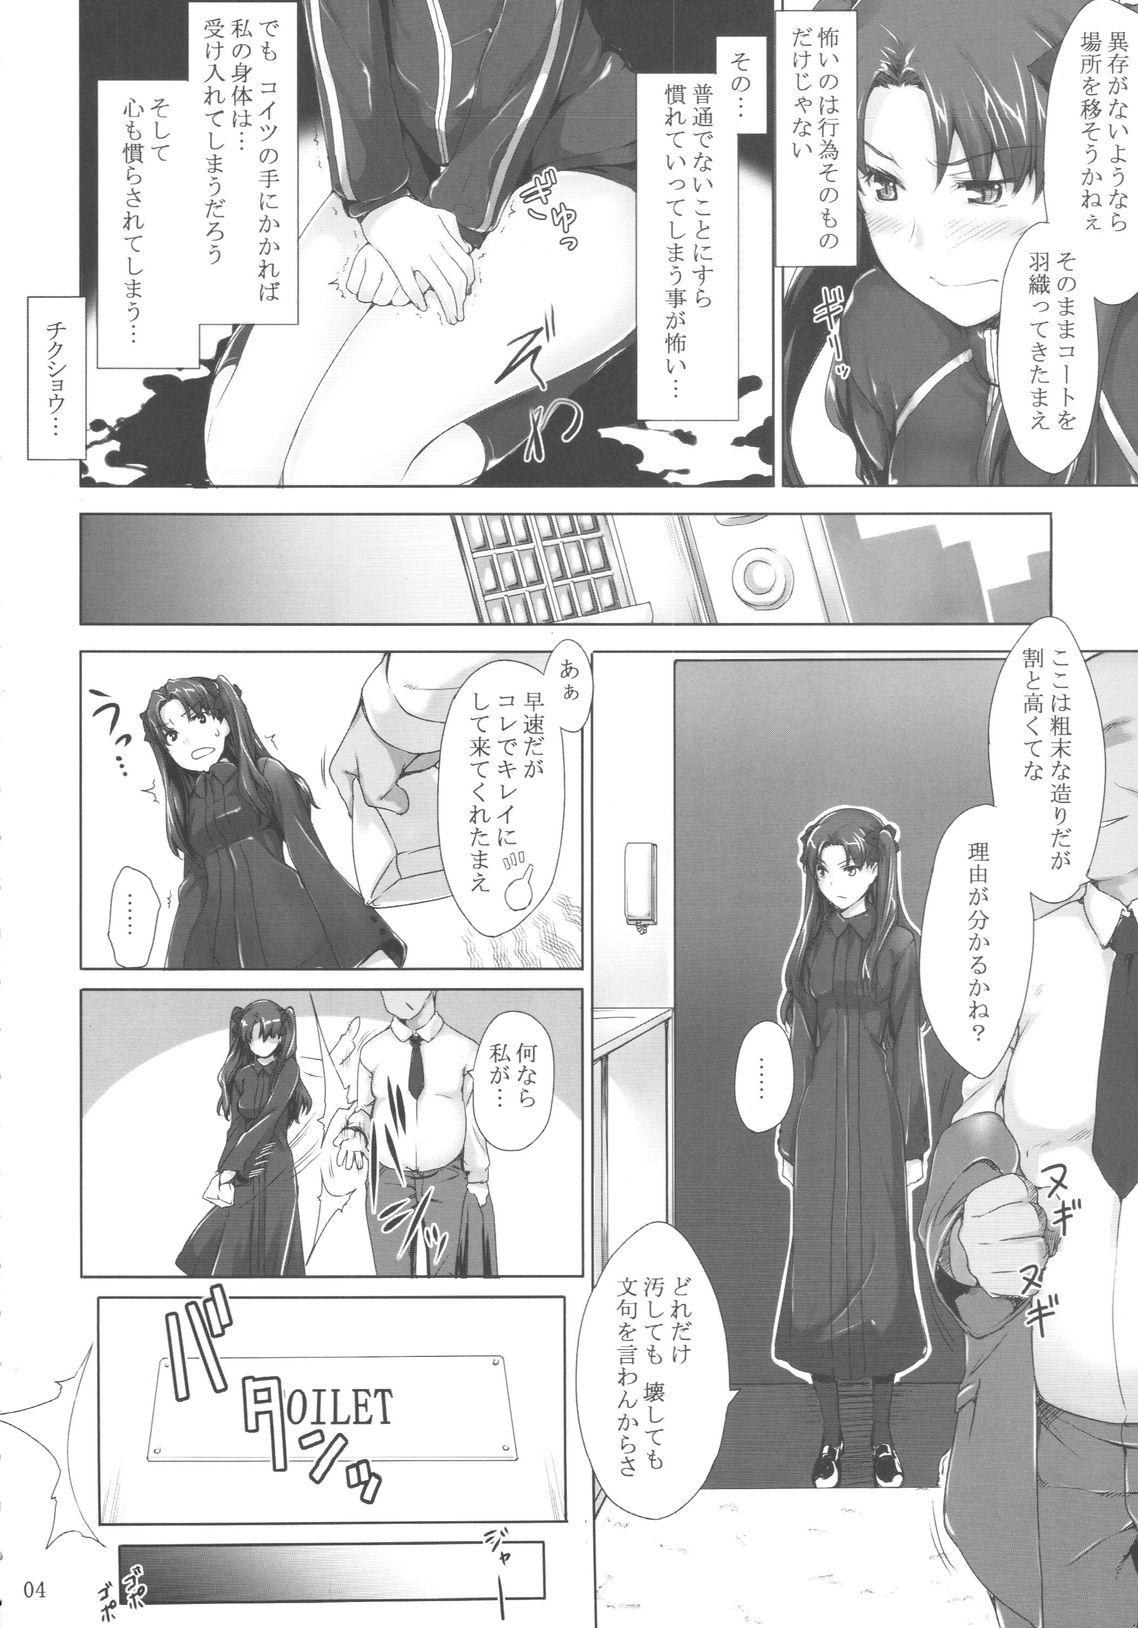 Tranny Sex Tohsaka-ke no Kakei Jijou 5 - Fate stay night Voyeur - Page 3